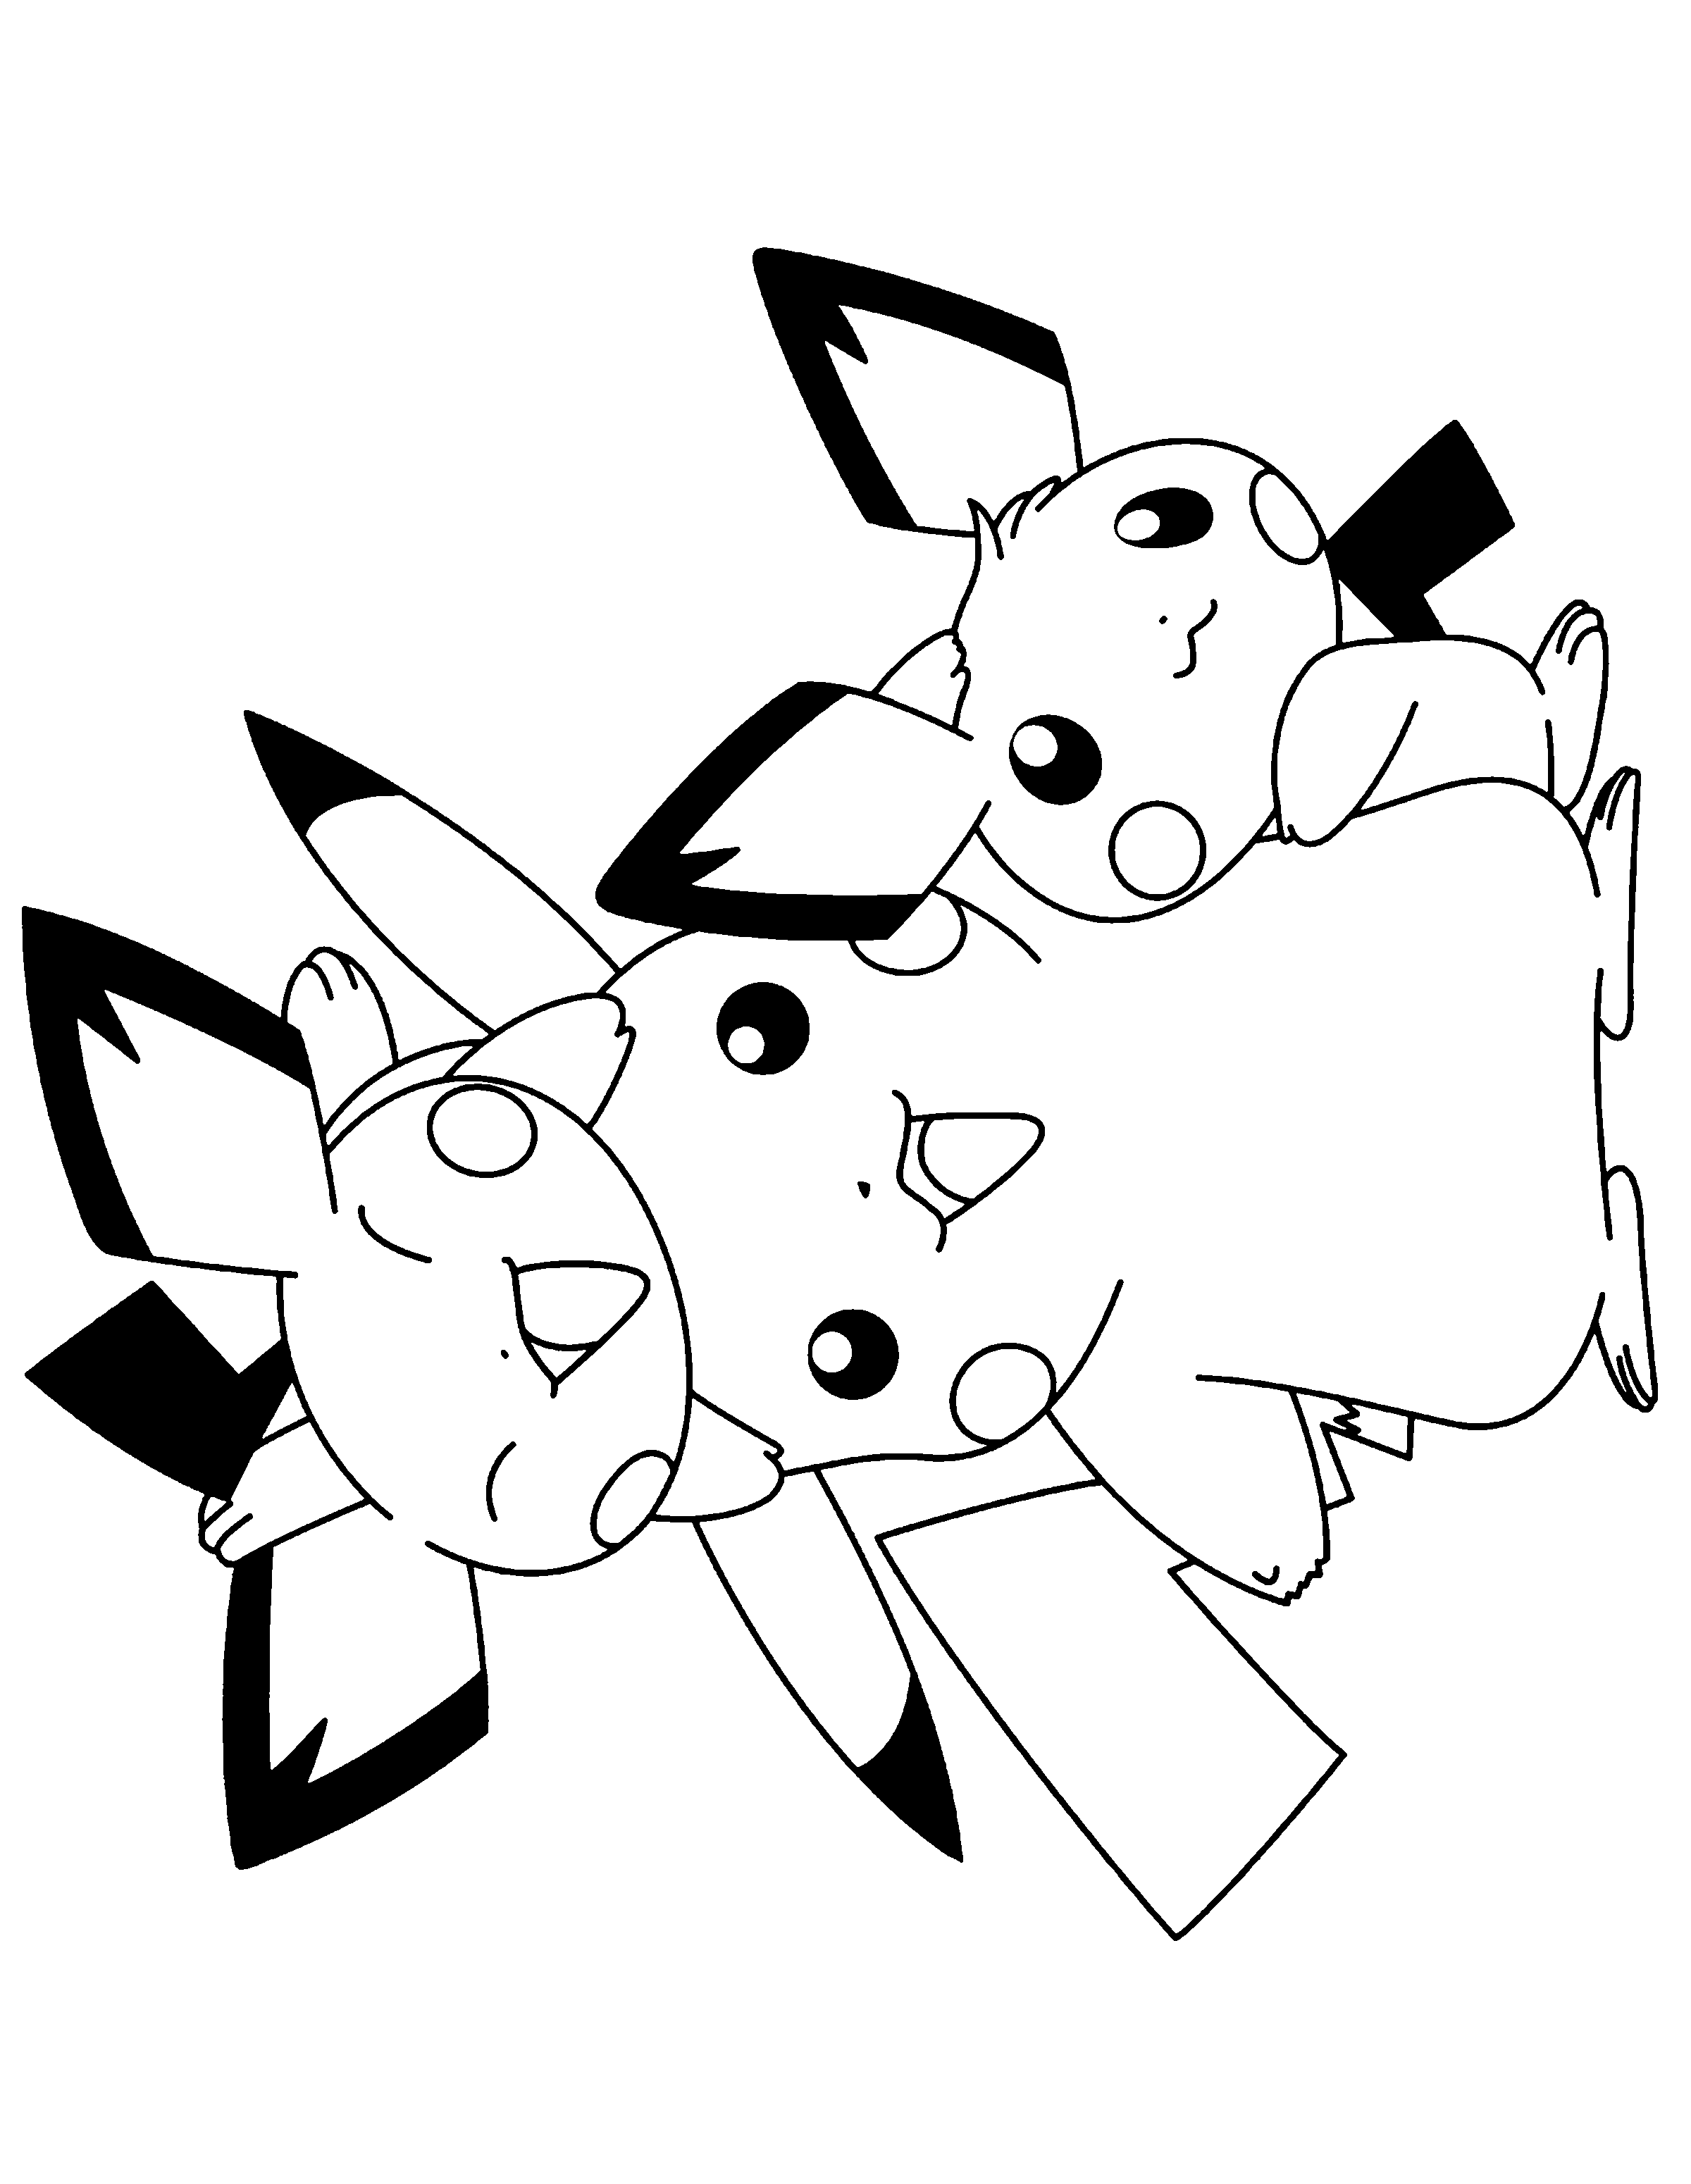 pixl-pokemon-colouring-pages